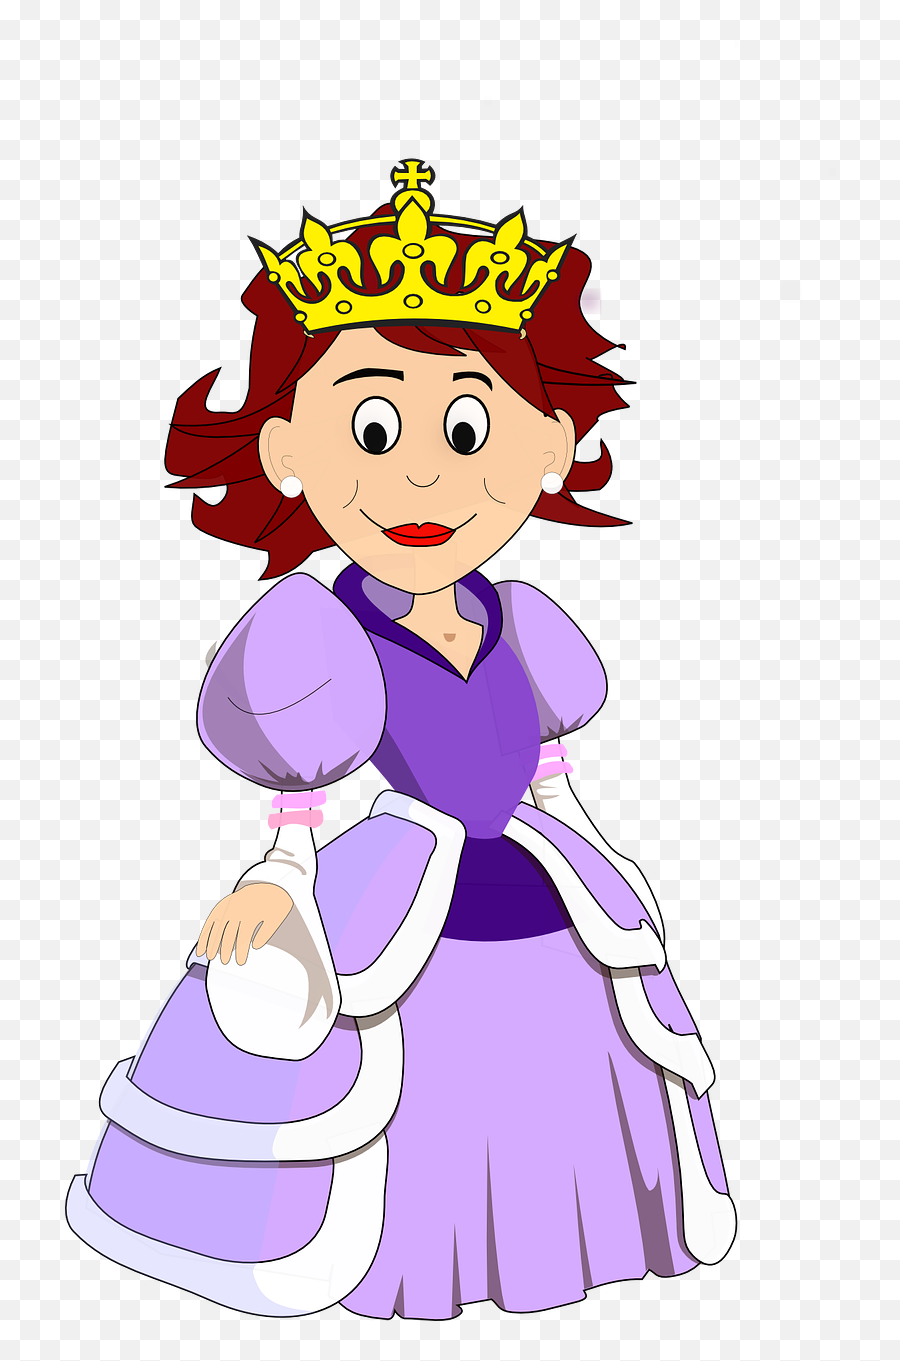 Queen Princess Crown Royal Monarch - Queen Clipart Transparent Background Emoji,King And Queen Crown Emoji